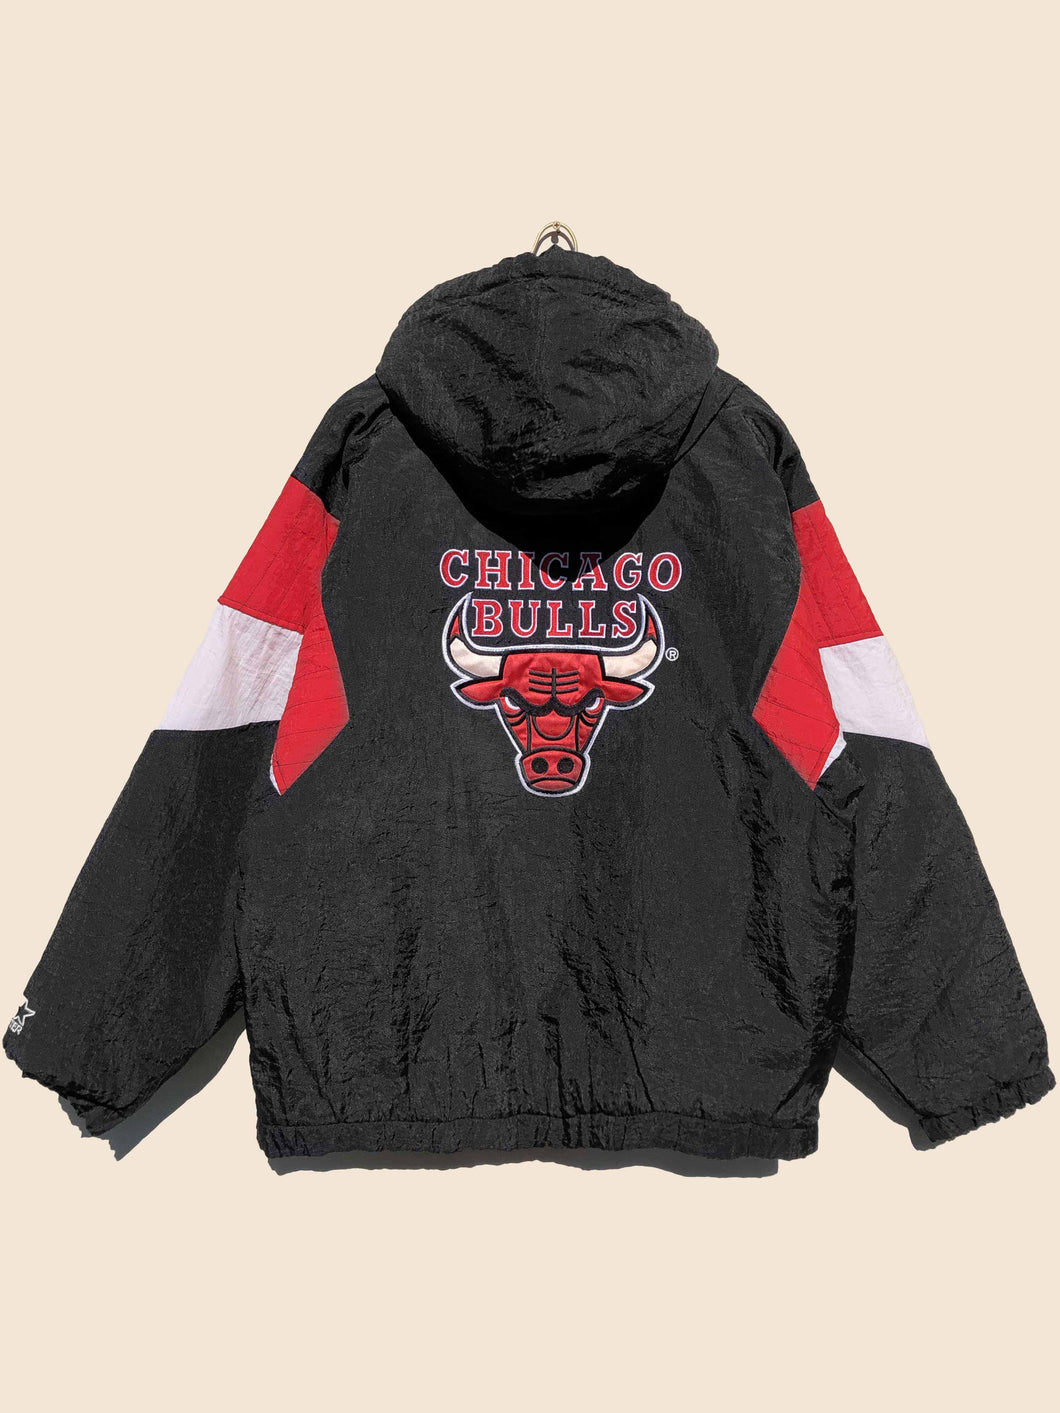 Chicago bulls jacket